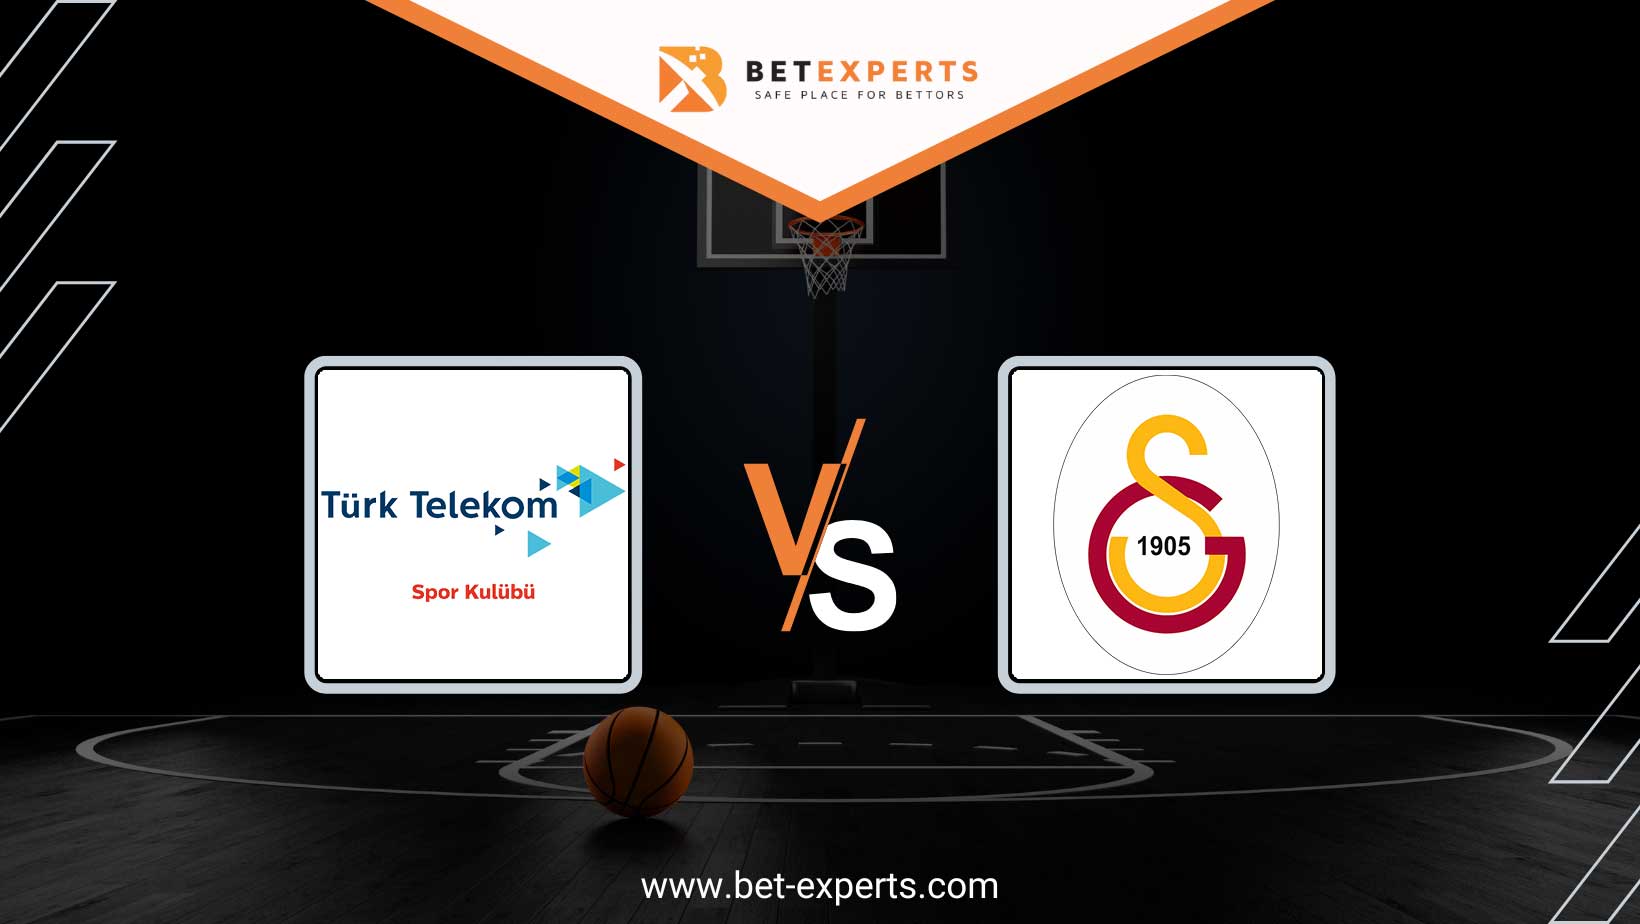 Turk Telekom vs Galatasaray Prediction